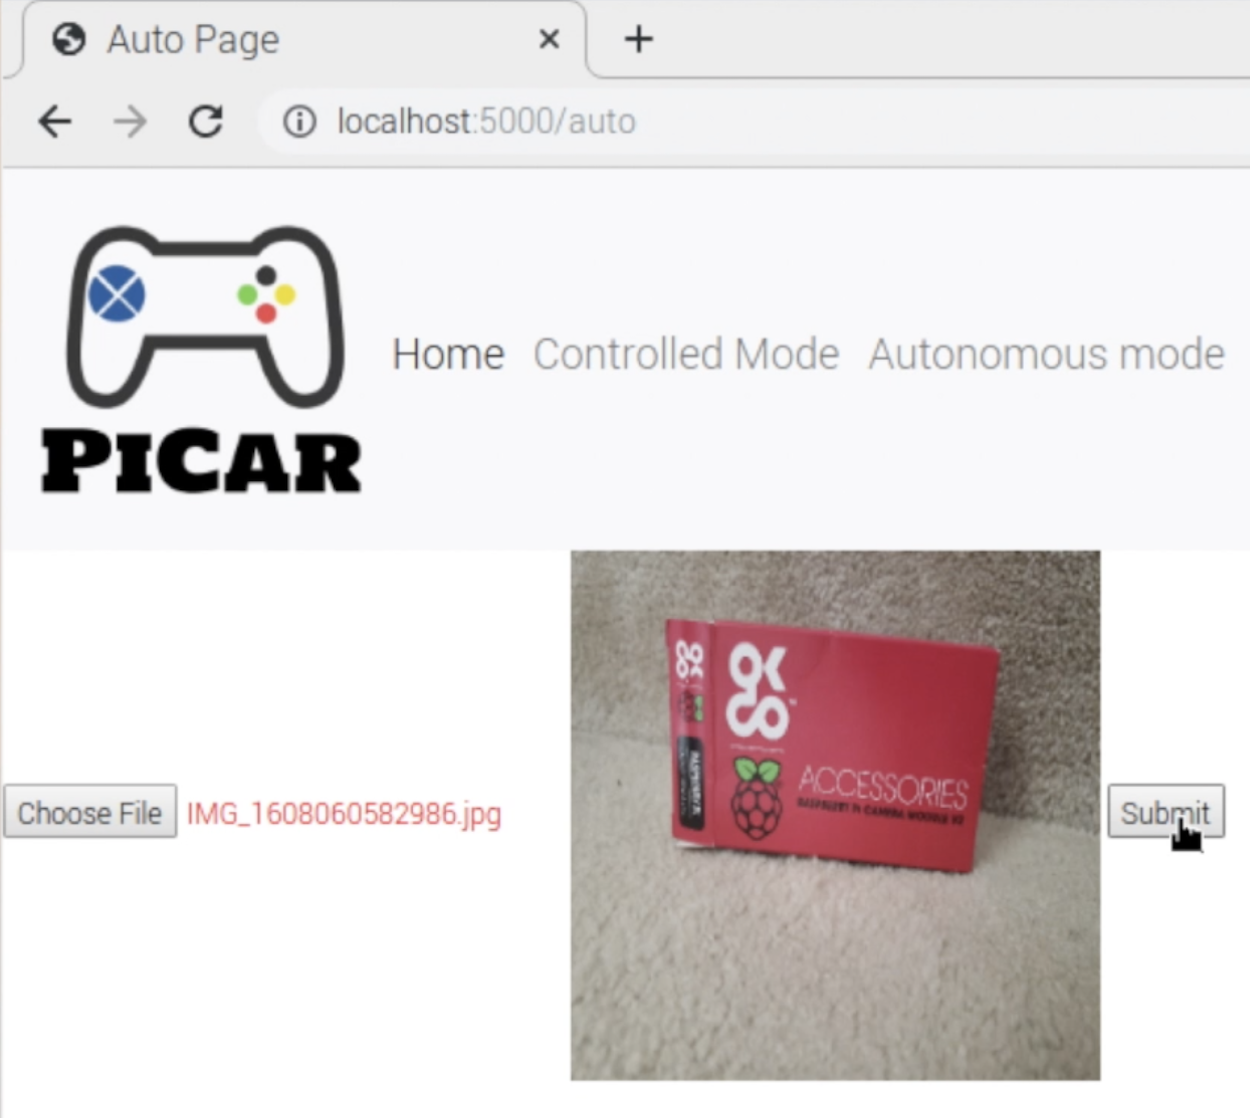 PiCar's Auto Page